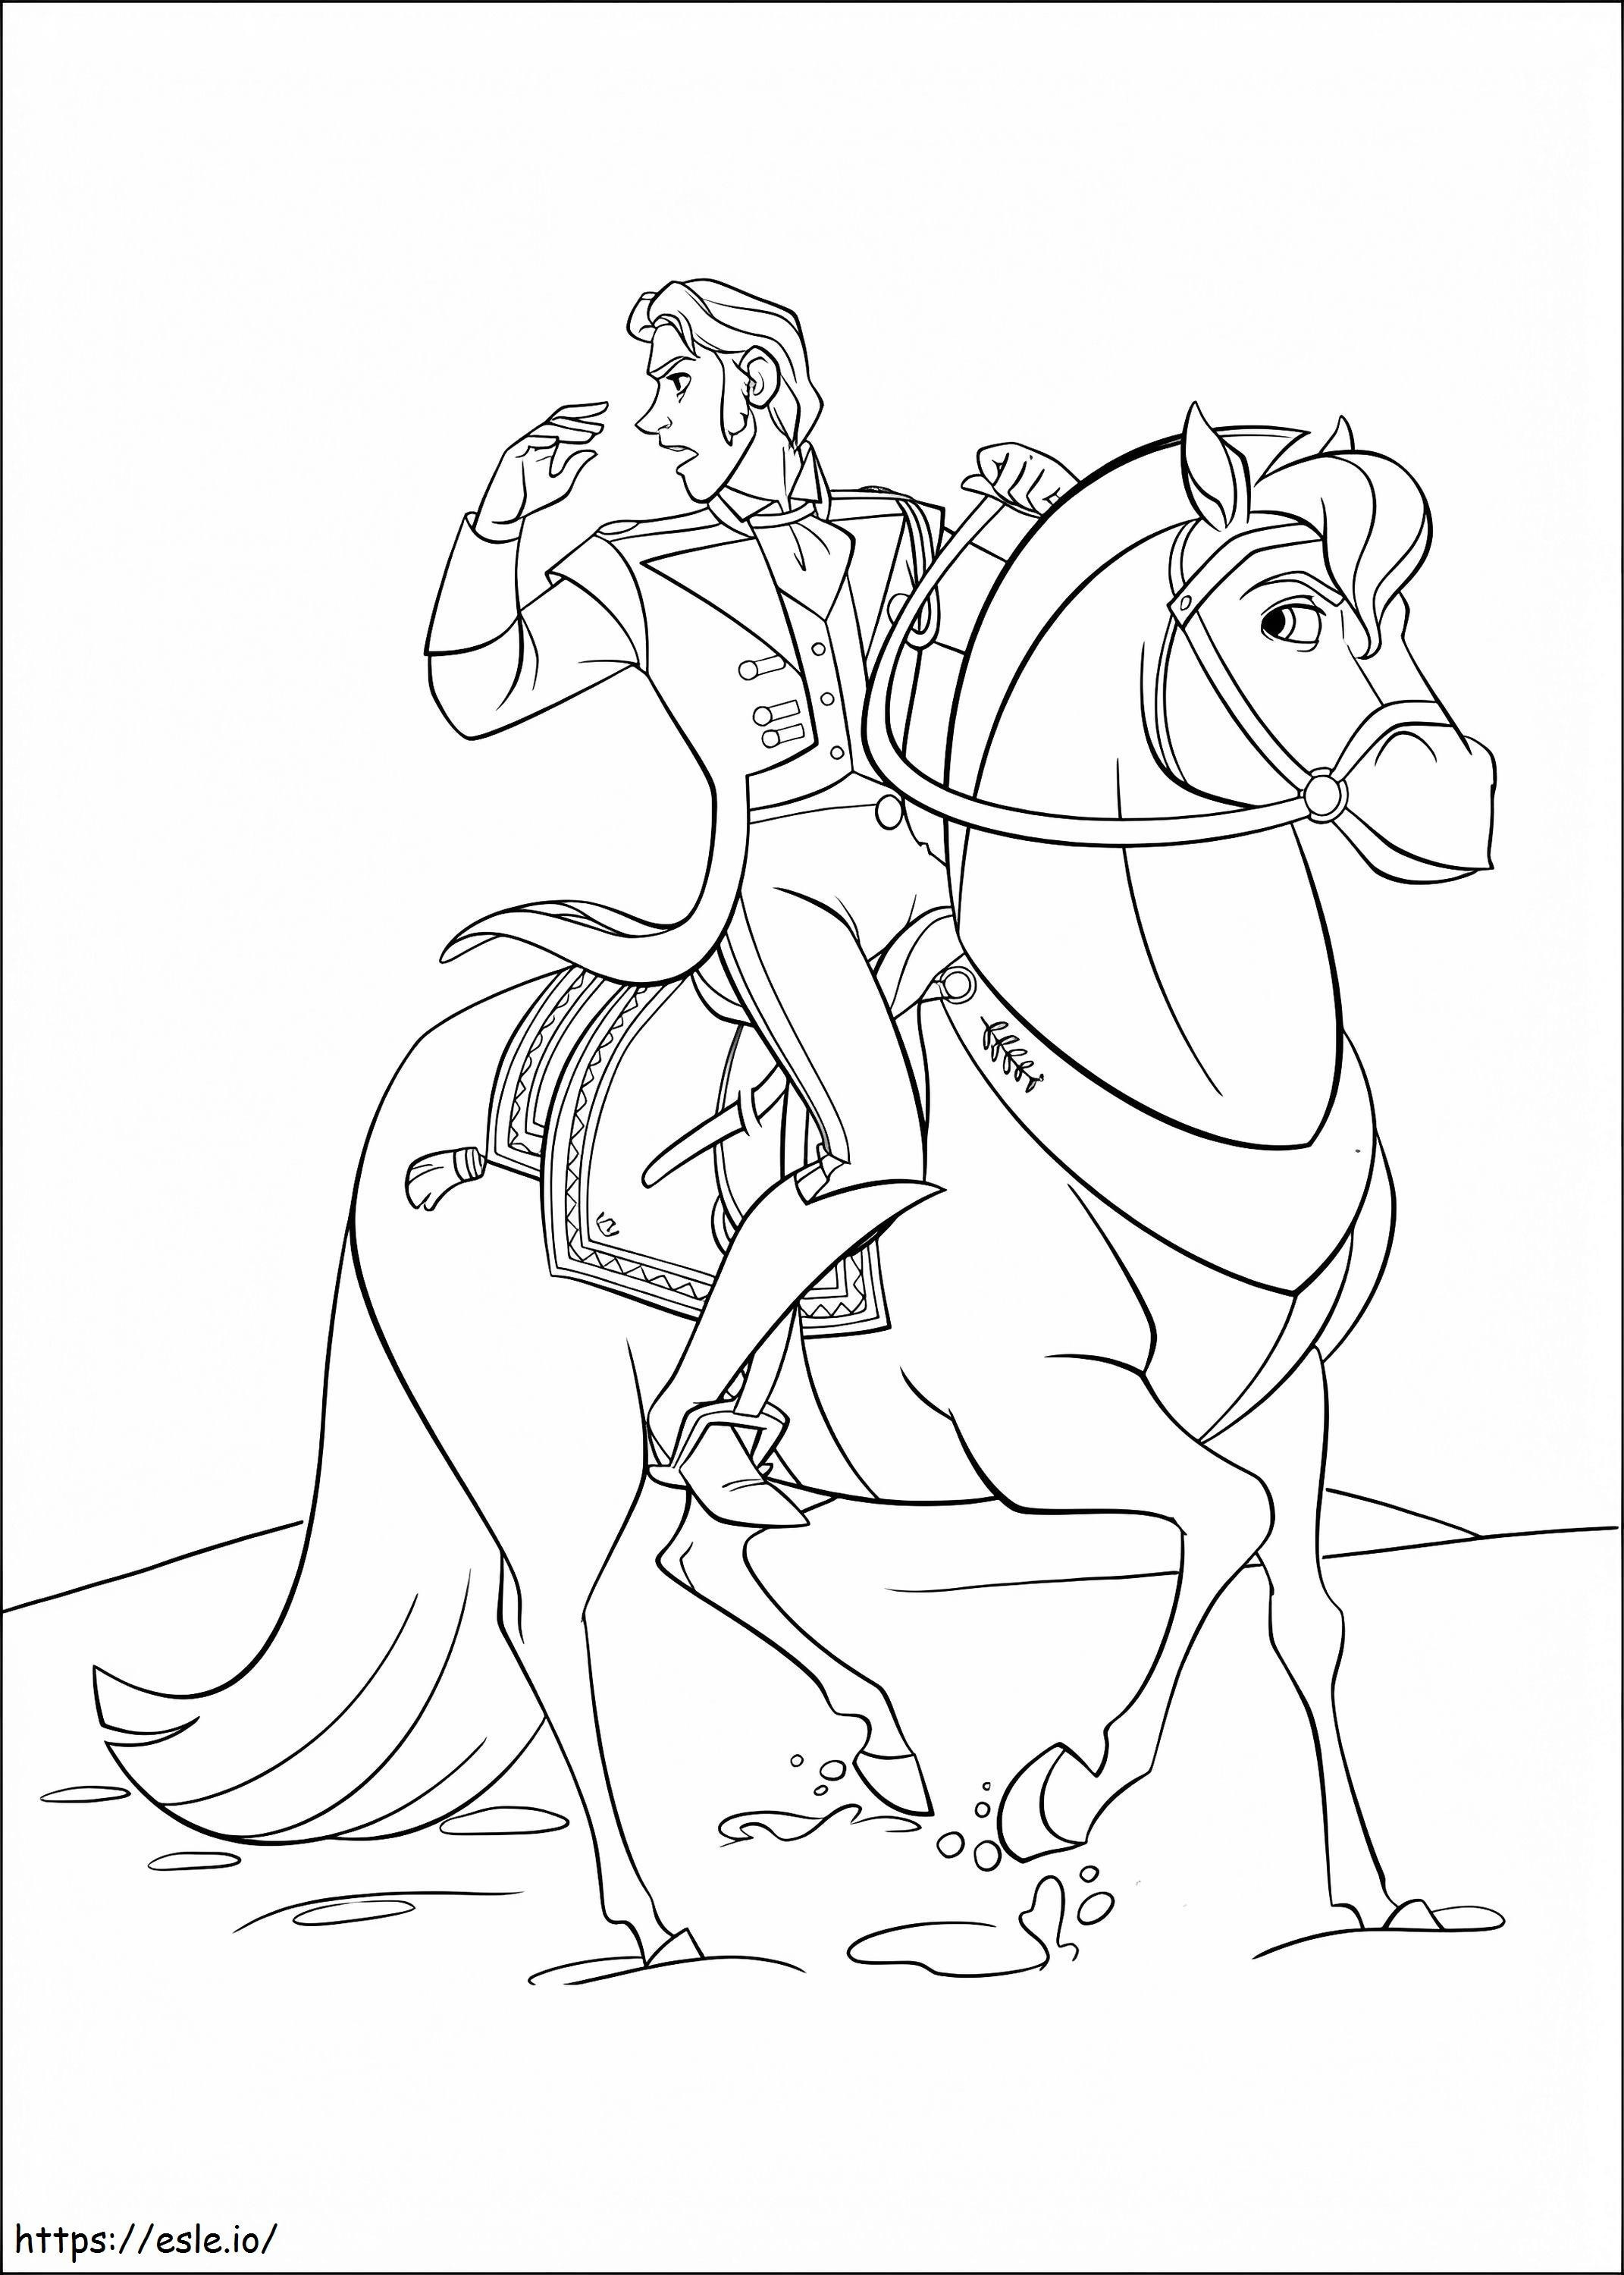 His Riding Lemon A4 coloring page